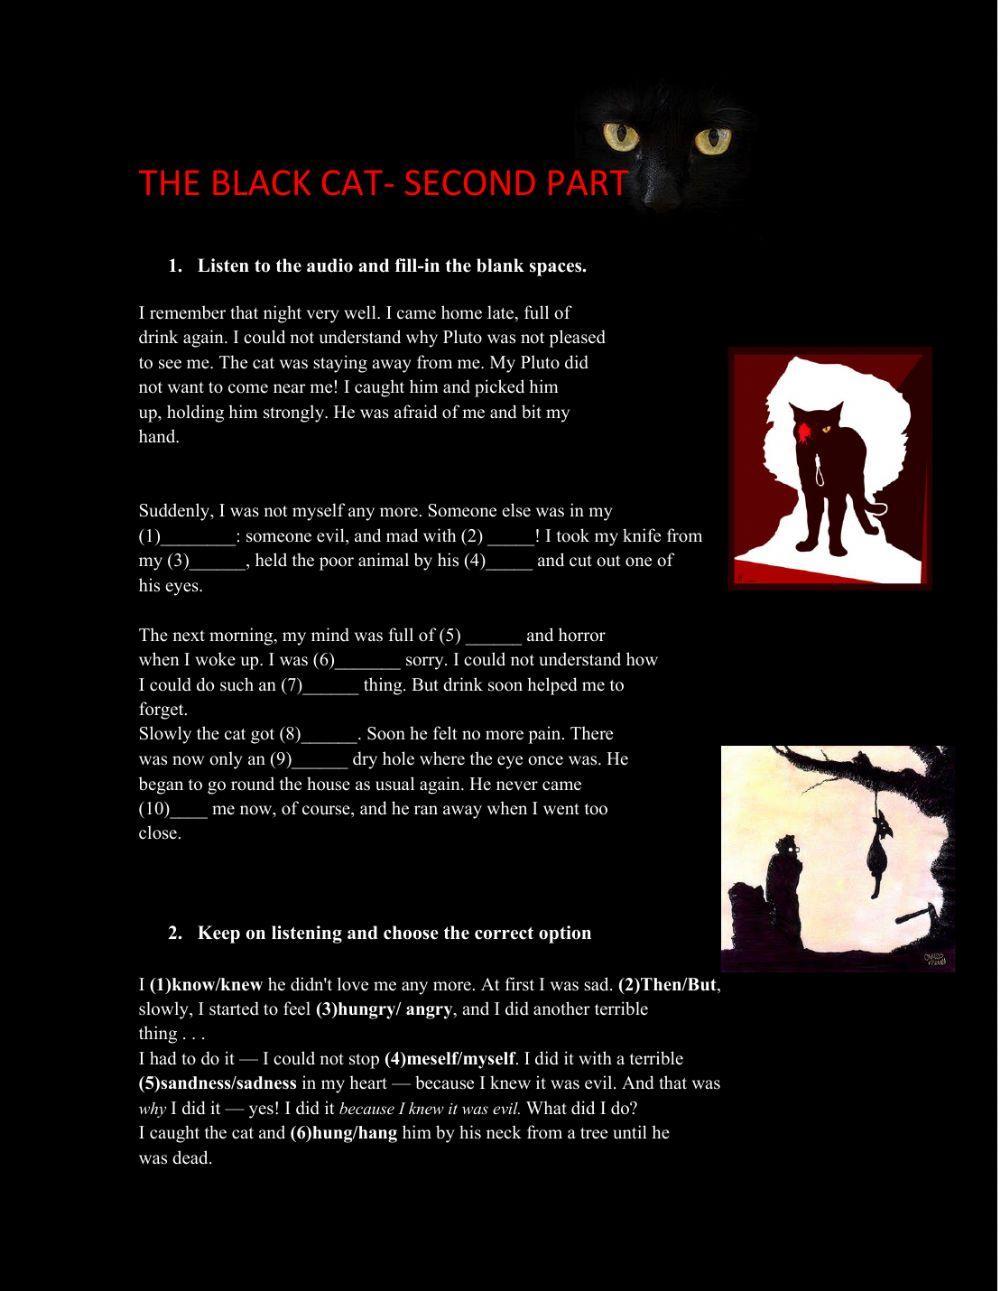 The black cat- second part